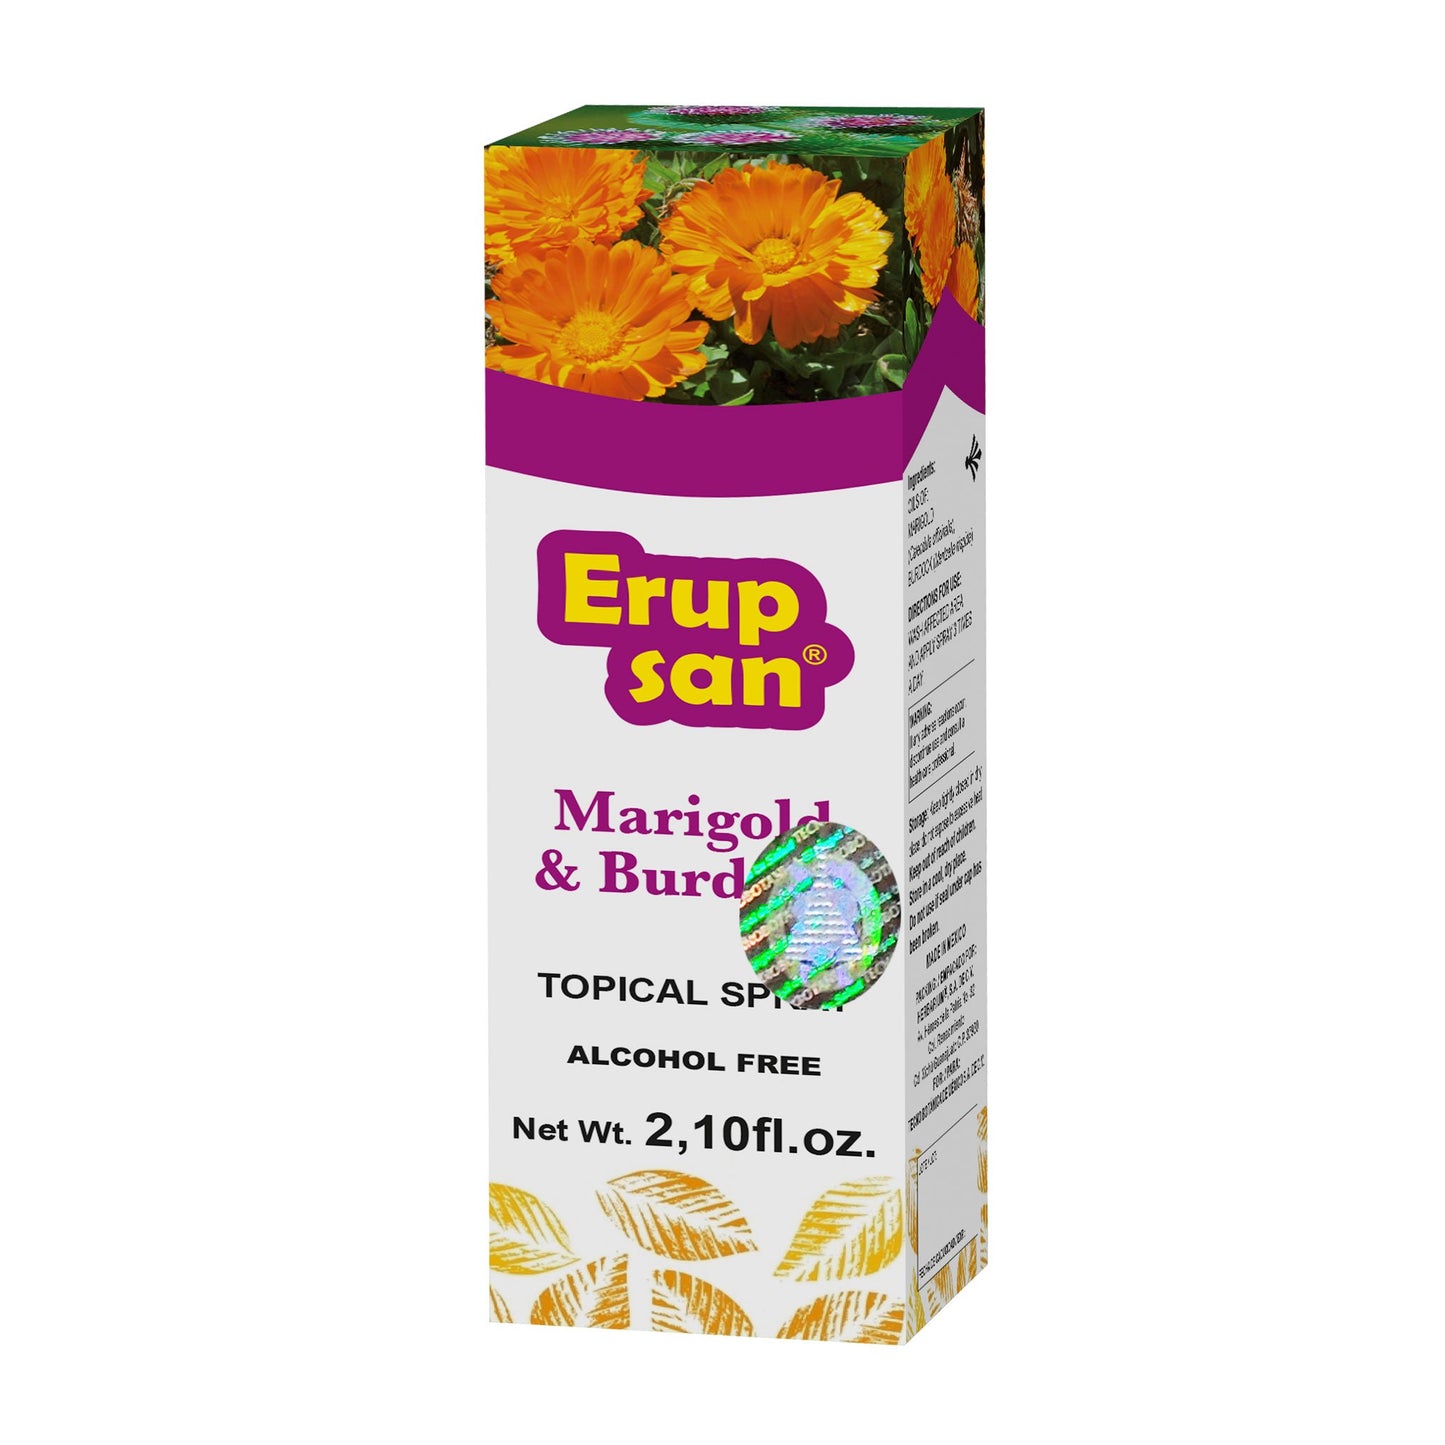 ERUPSAN ® spray tópico 60ml